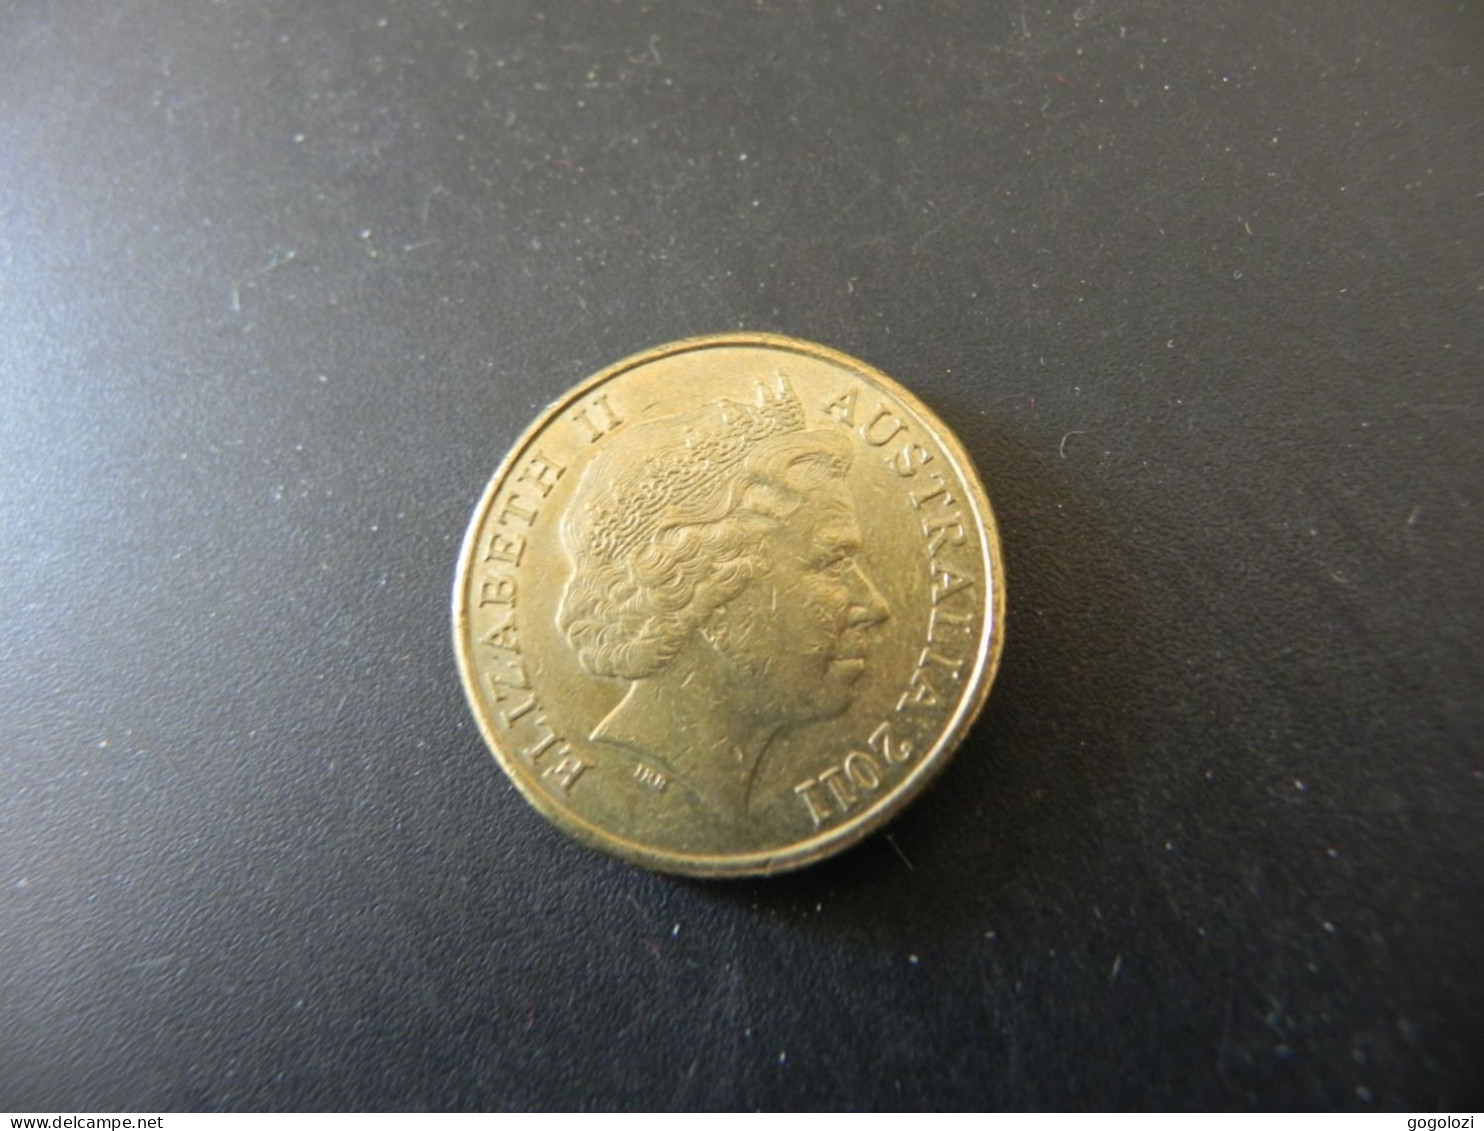 Australia 1 Dollar 2011 - Dollar